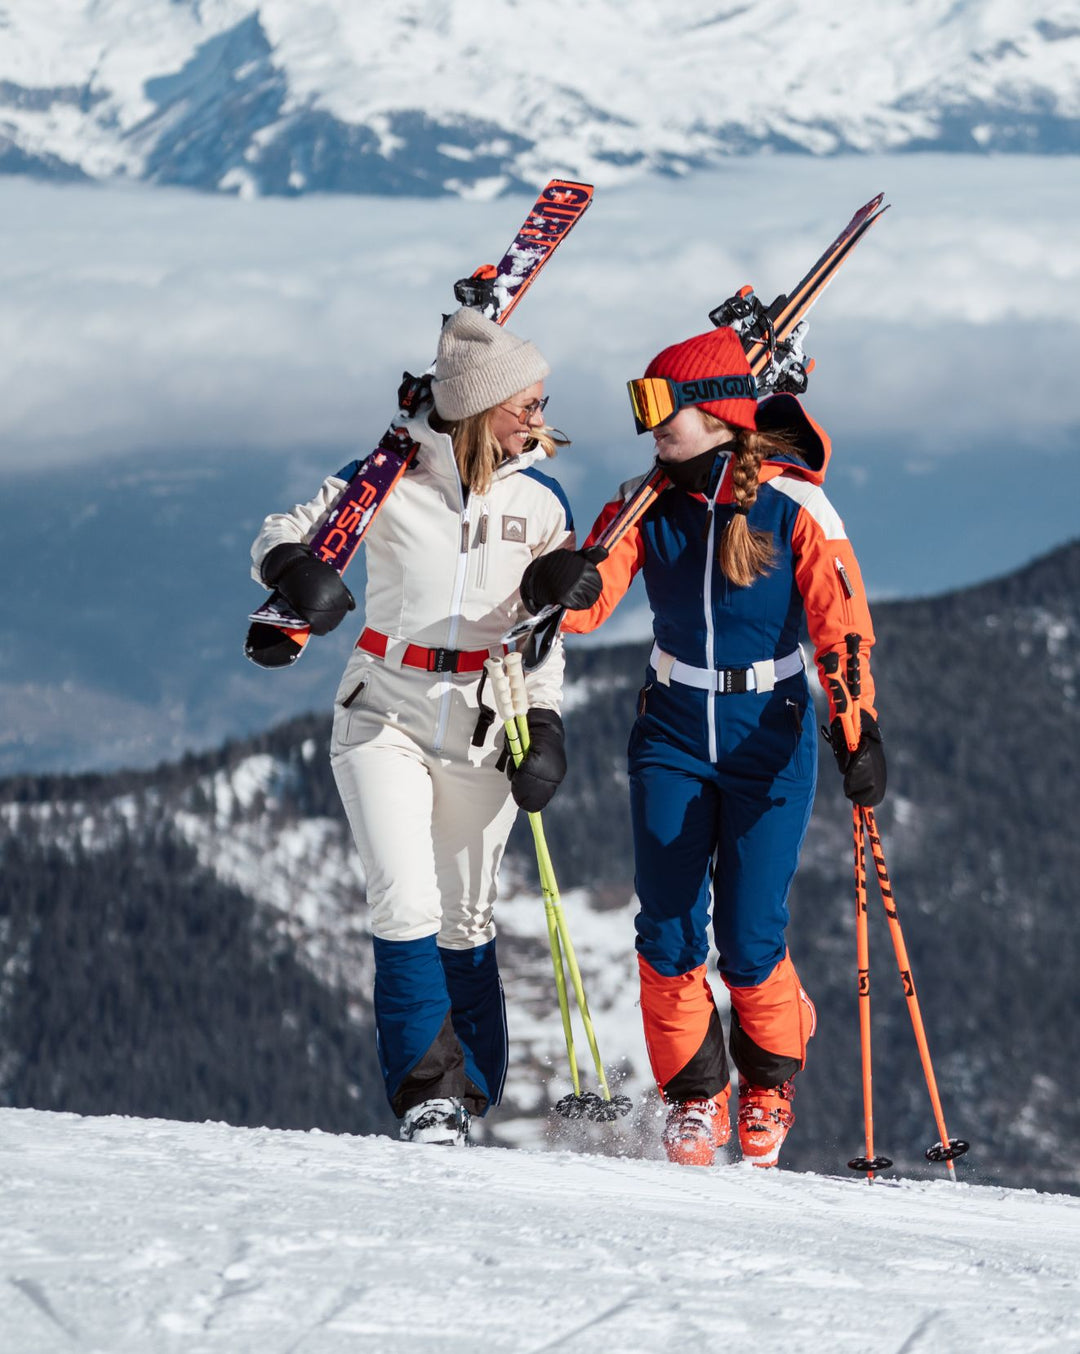 Chic Ski Suit Navy & Red - Women's